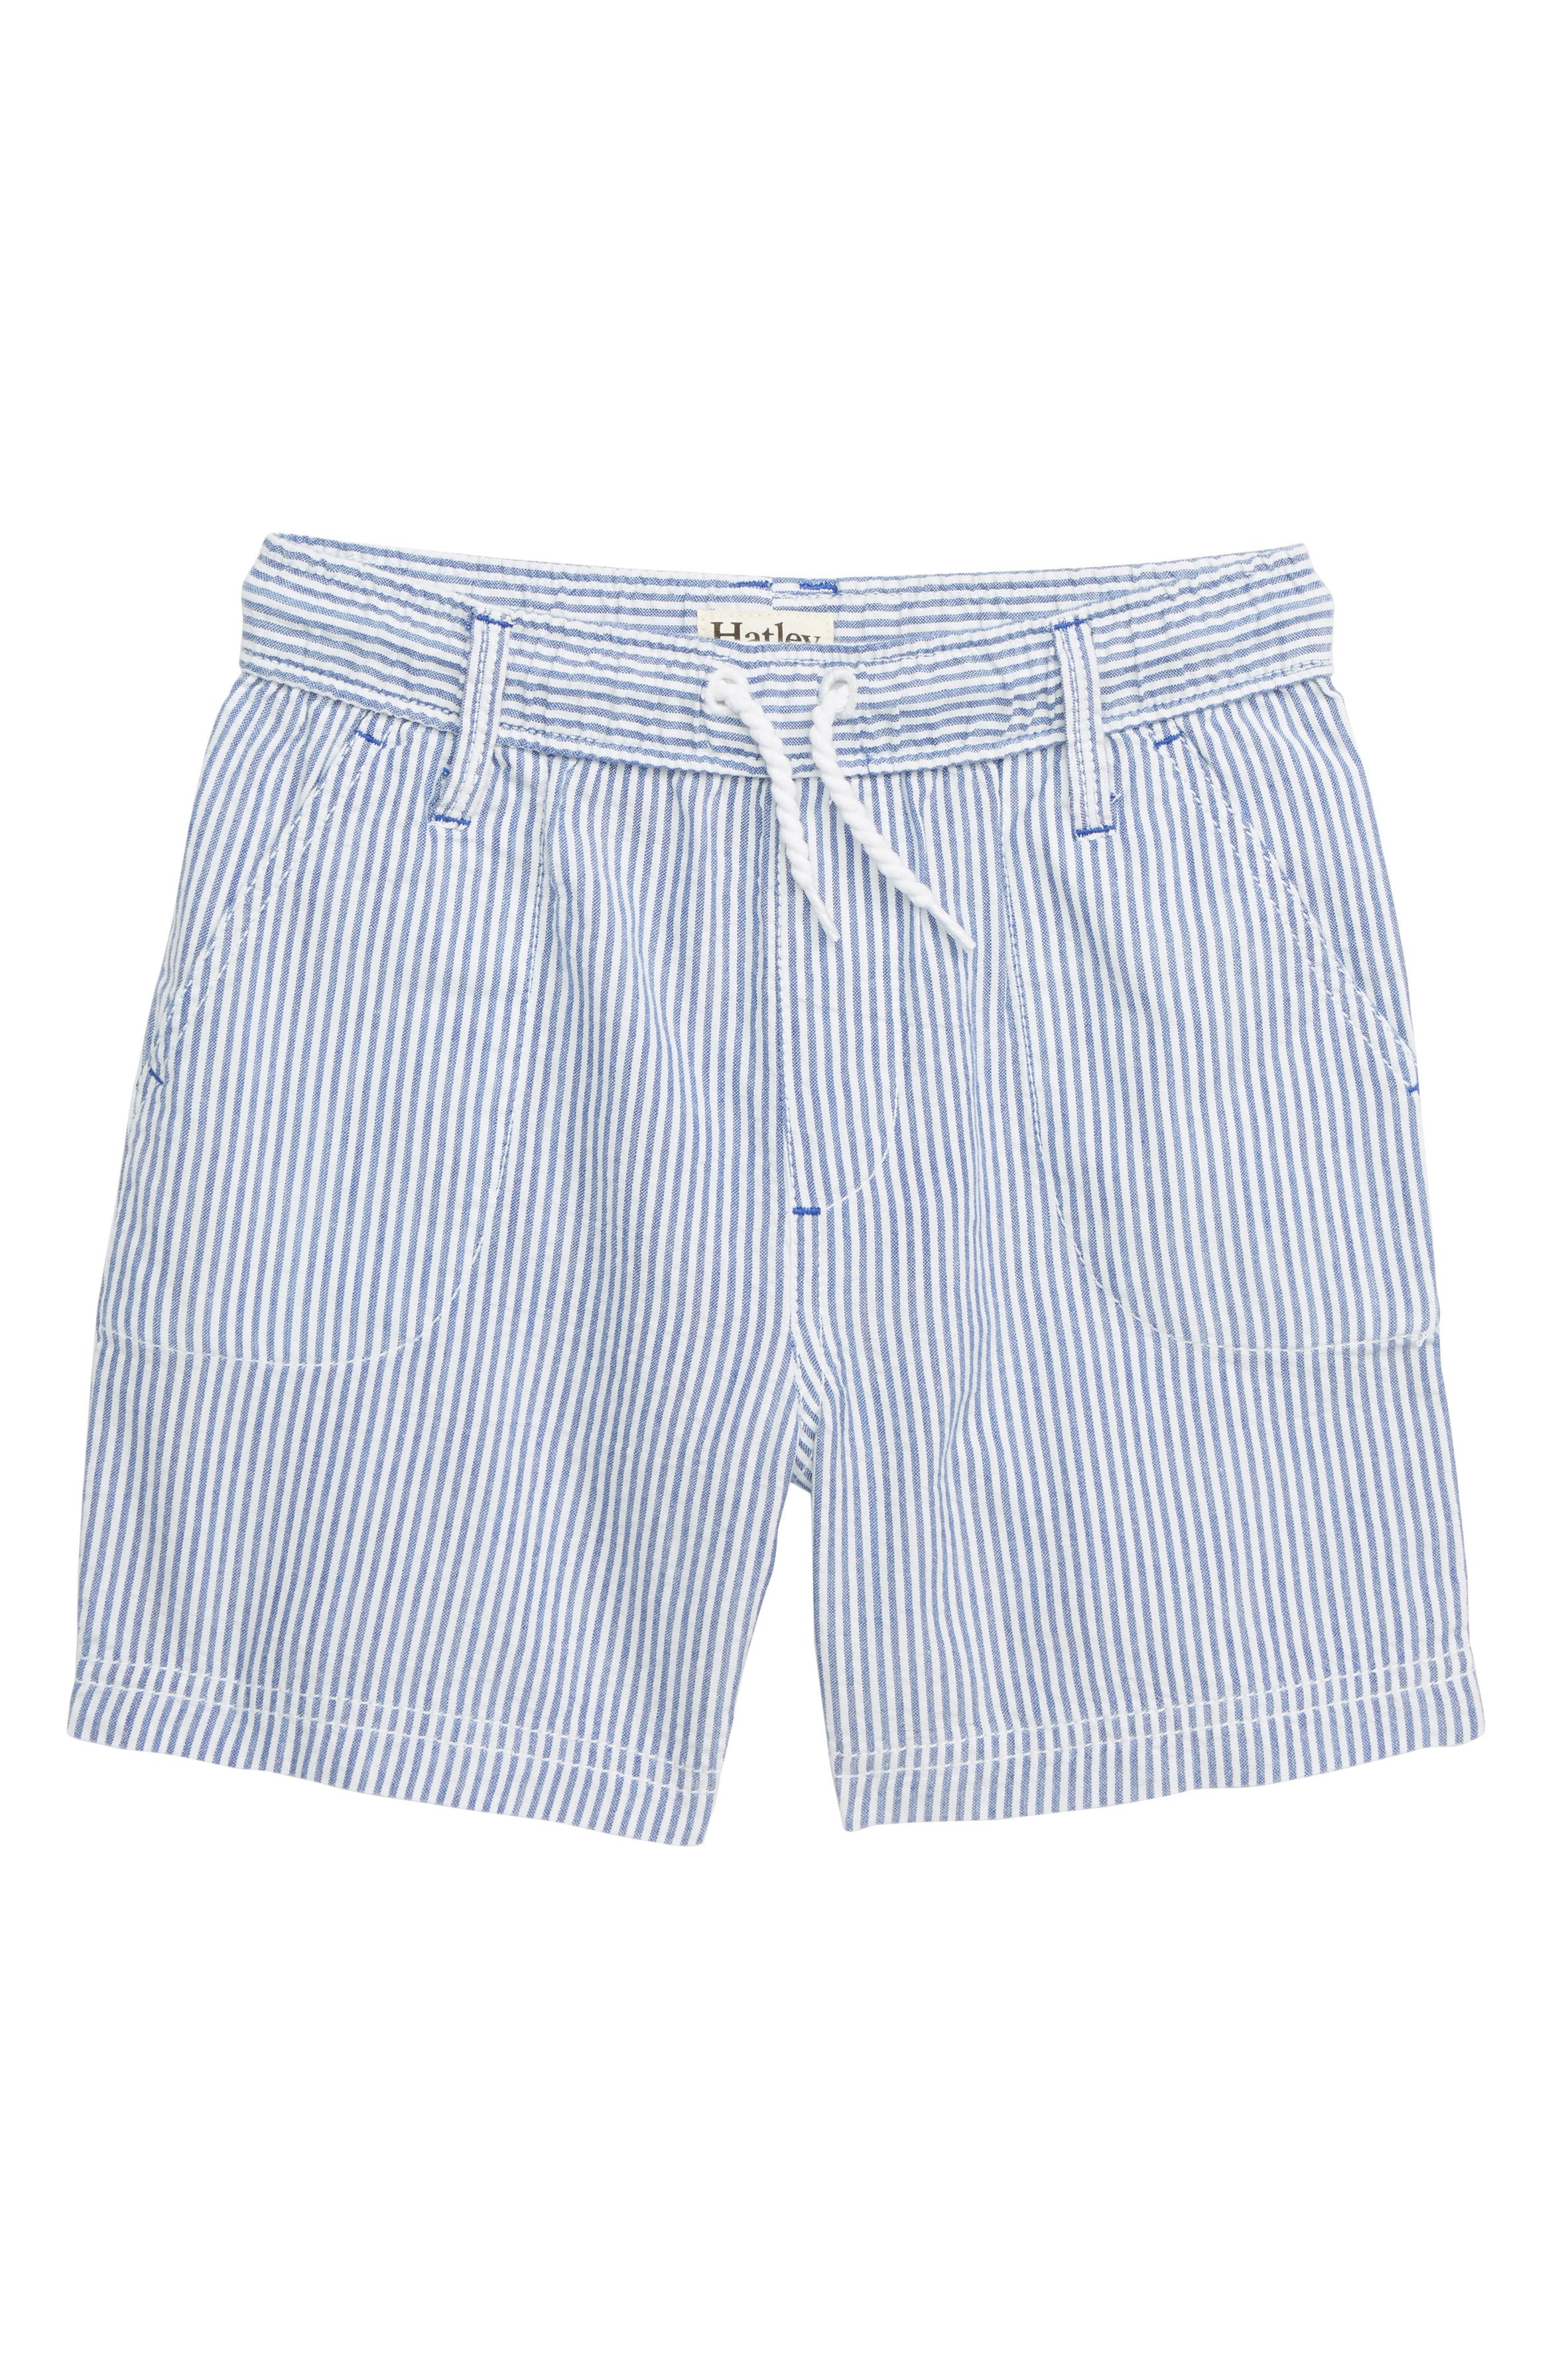 Hatley Blue Stripe Shorts (Toddler Boys, Little Boys & Big Boys ...